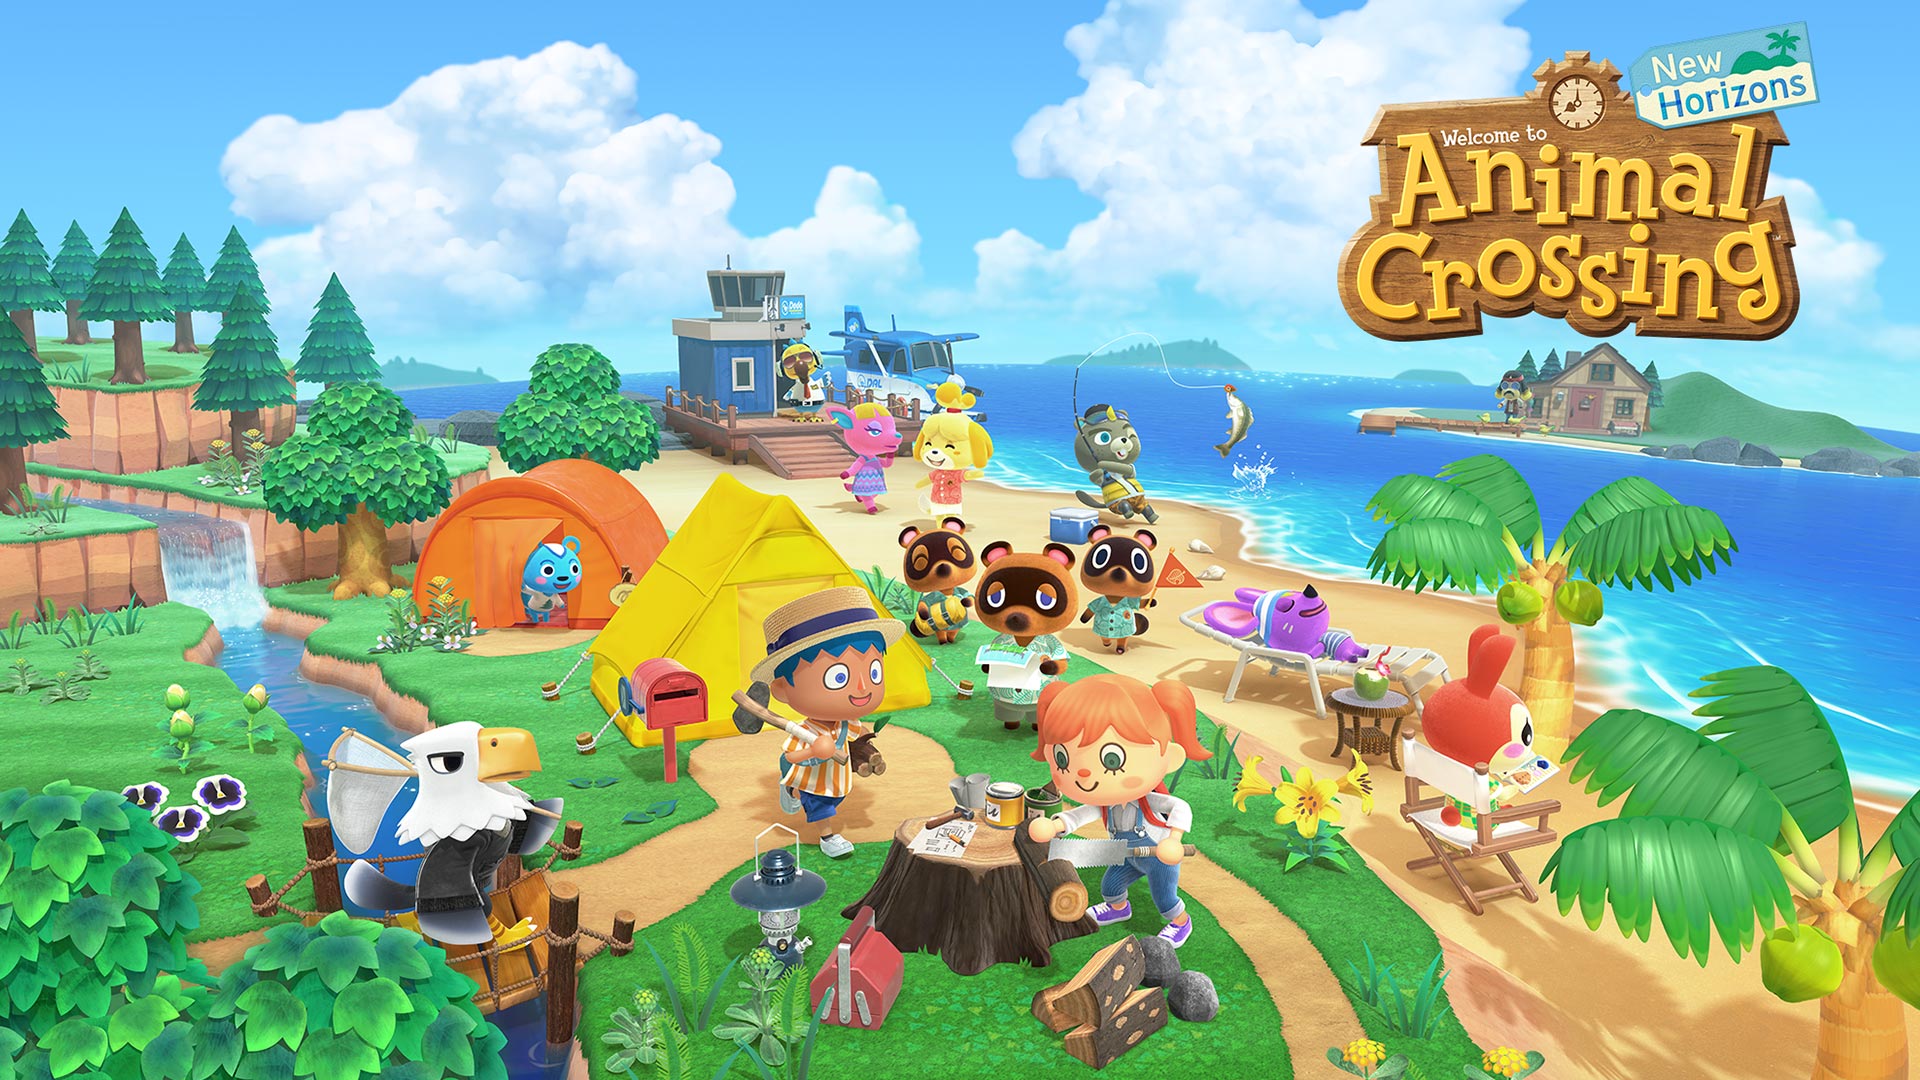 Animal Crossing New Horizons Free Eshop Download Code